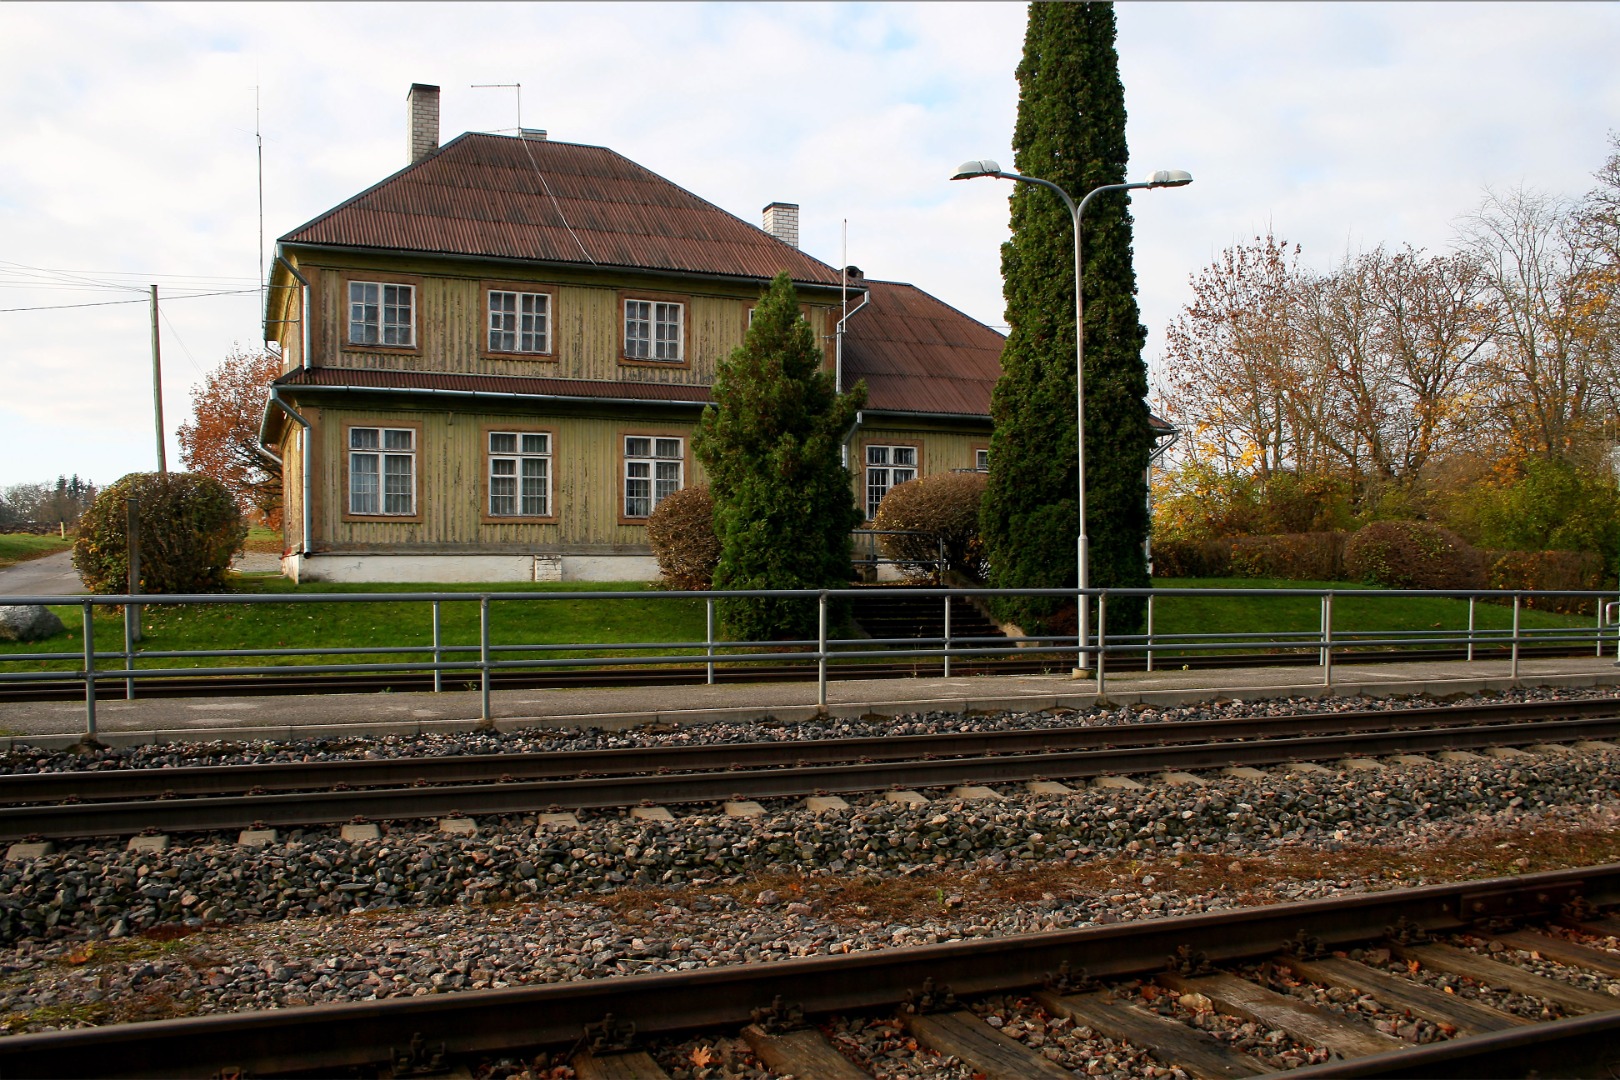 Main building of Kaarepere Railway Station rephoto